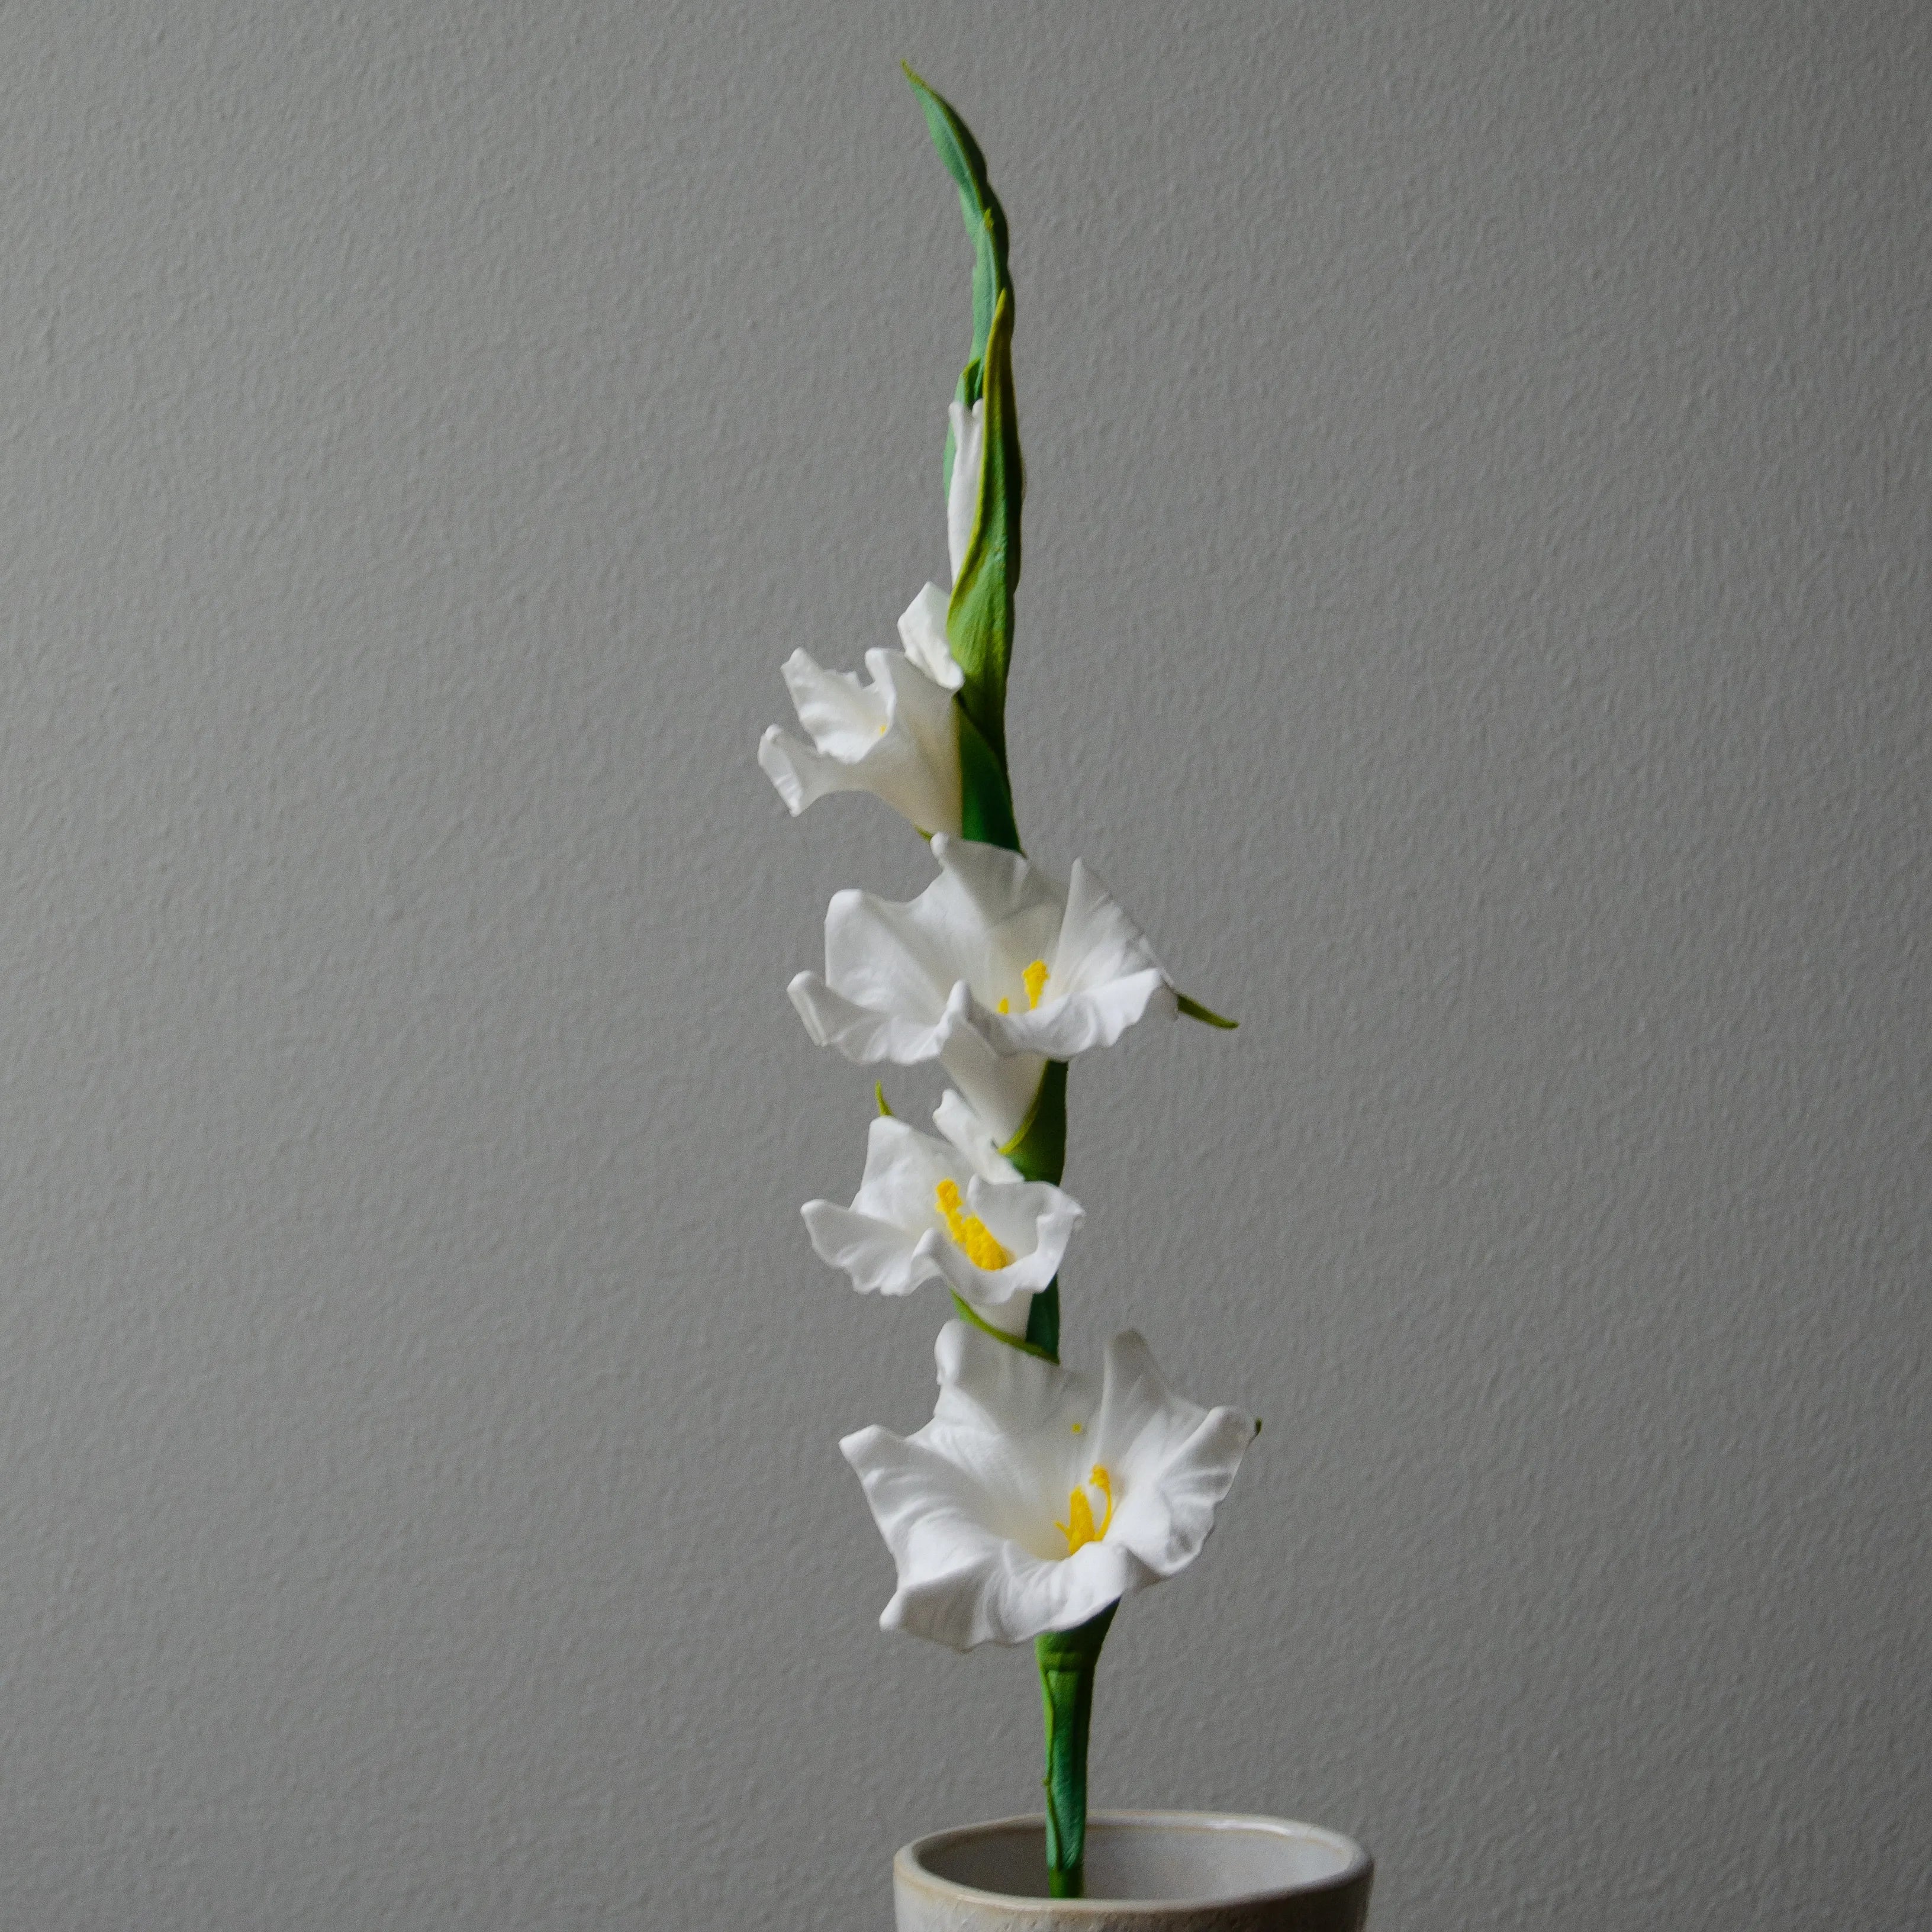 Artificial Gladiolus Flower from Botané